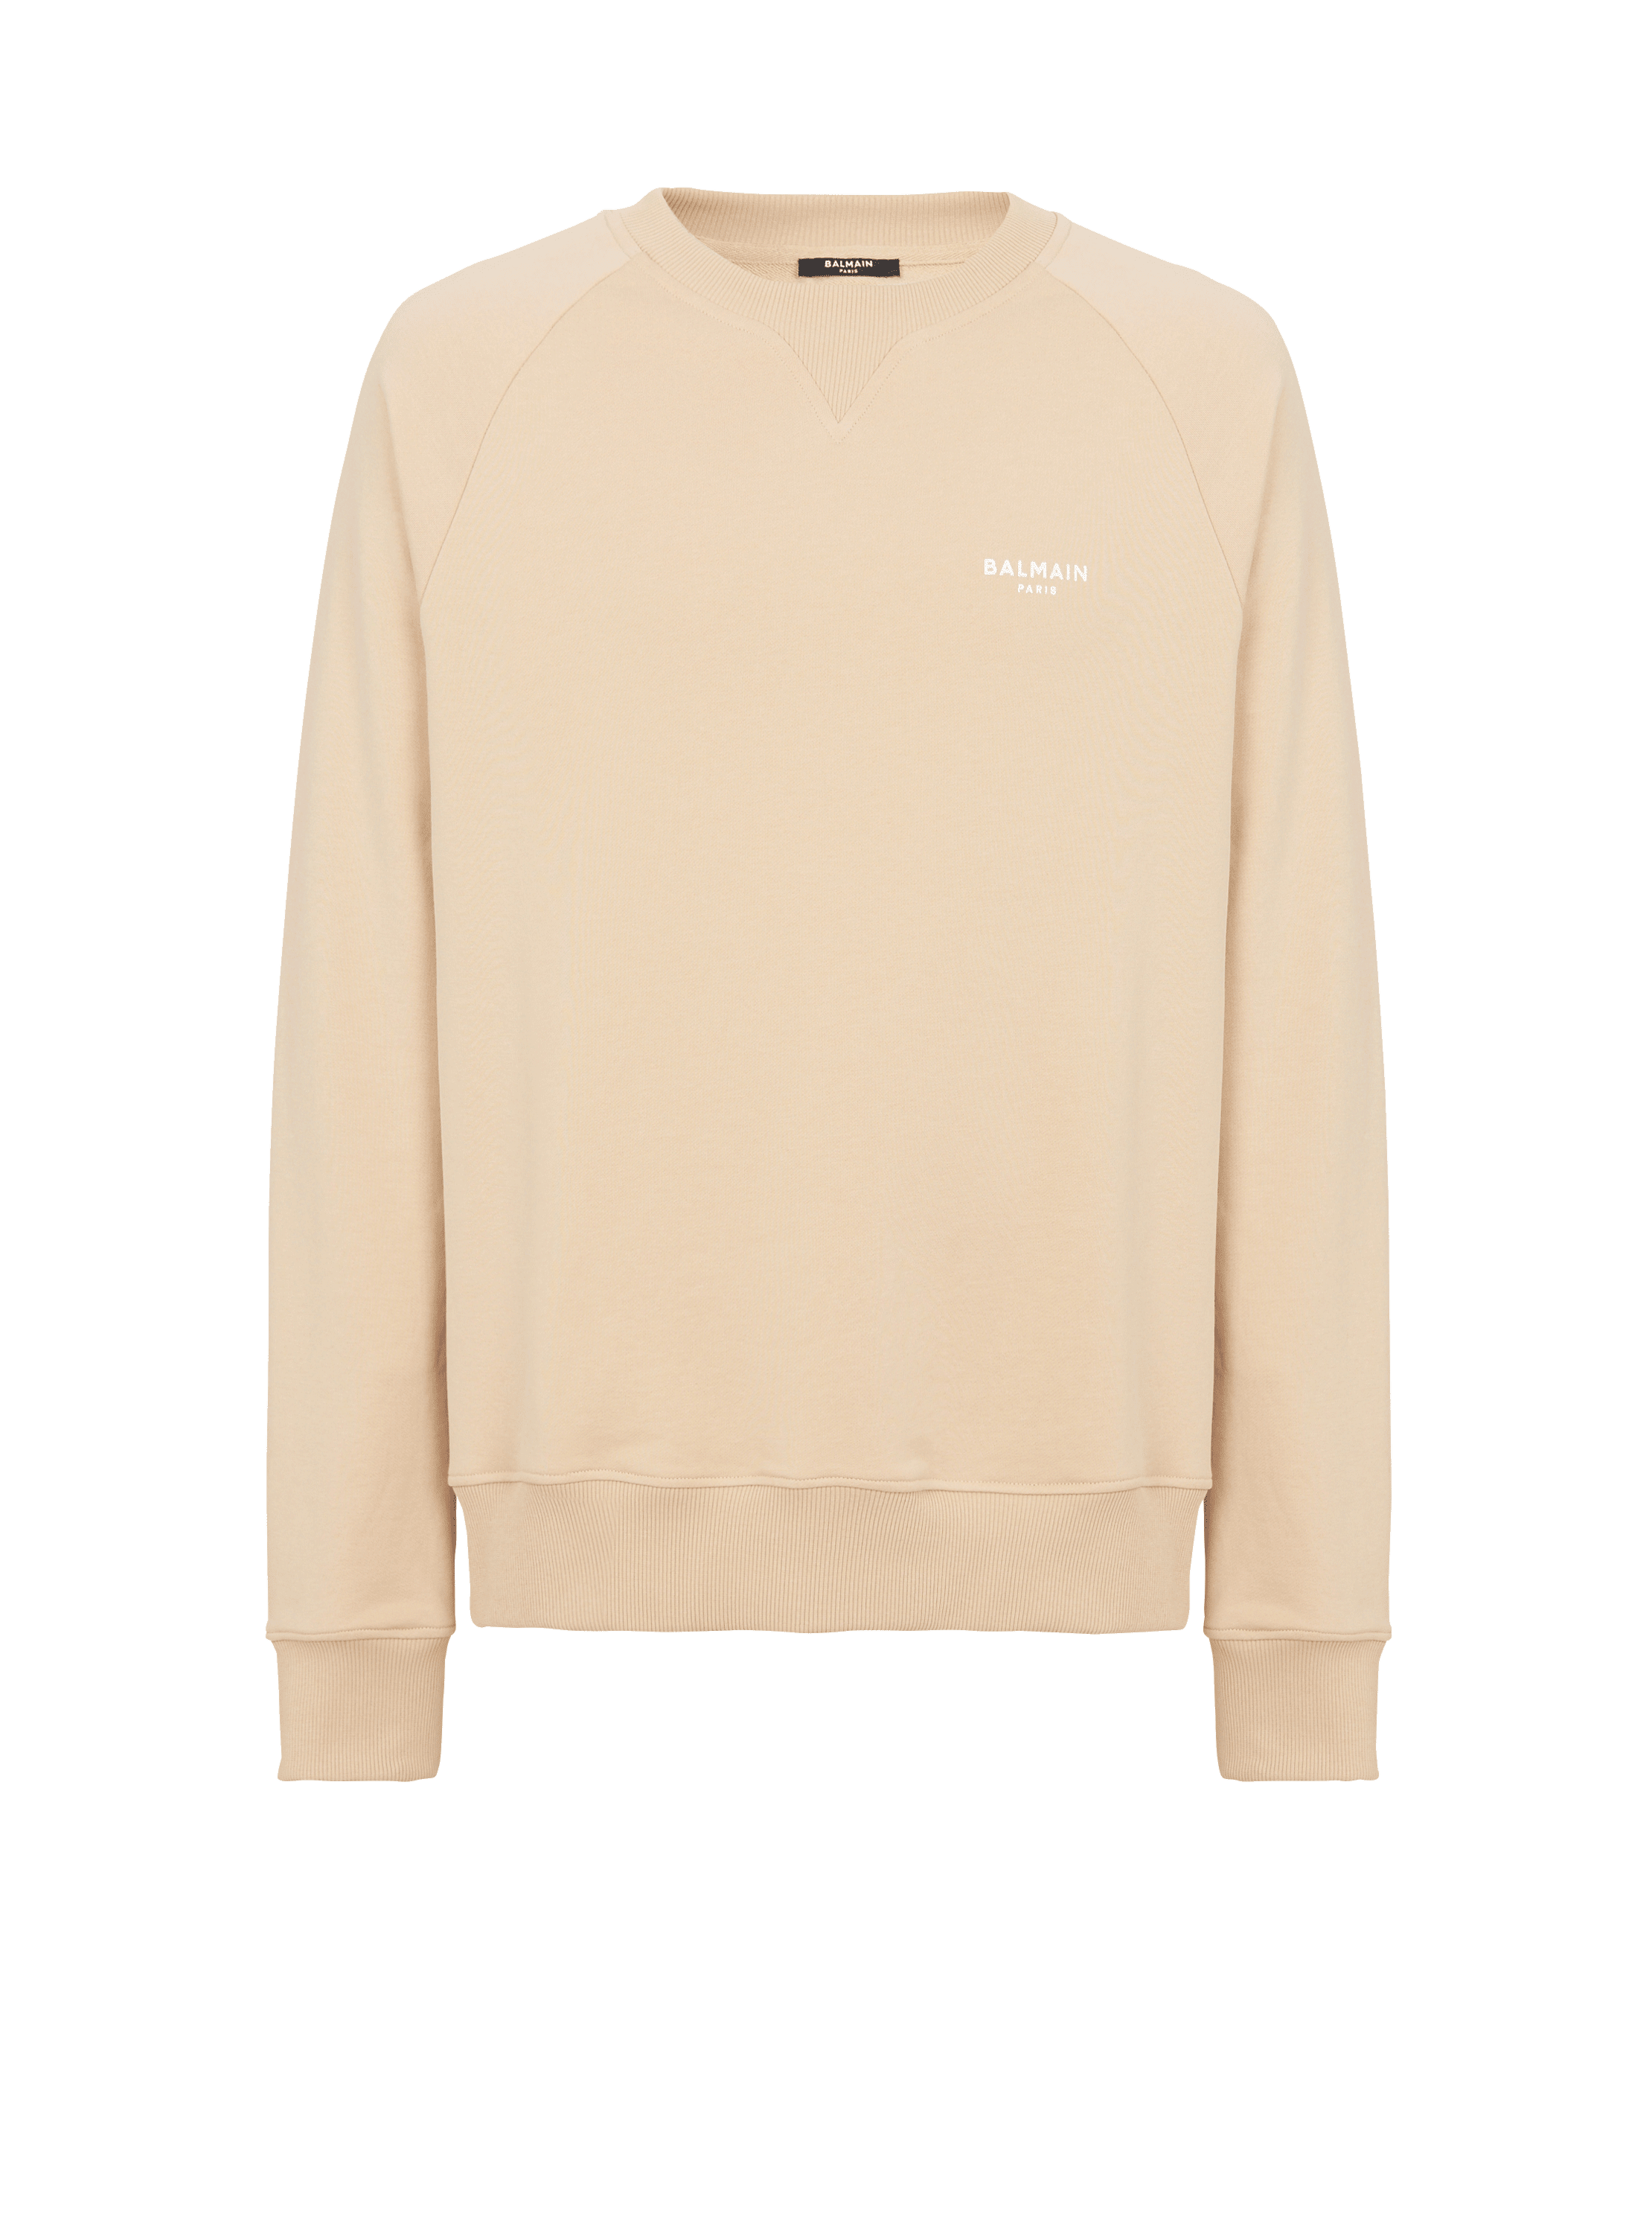 Flocked Balmain sweatshirt, beige, hi-res